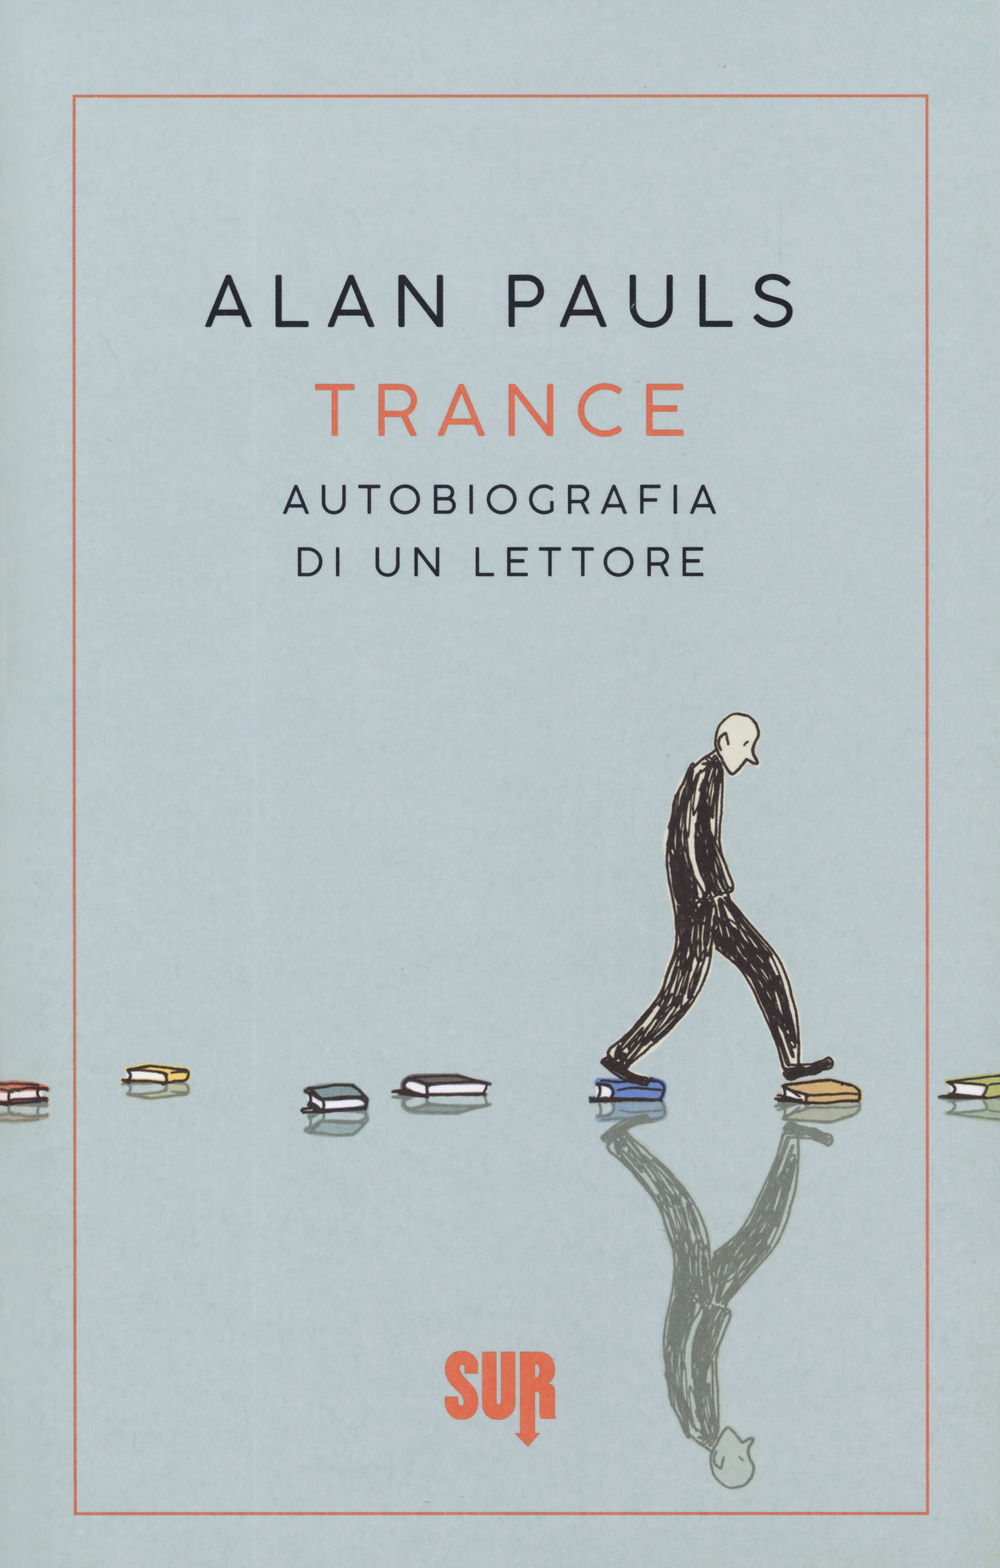 Trance. Autobiografia di un lettore - Alan Pauls - Sur